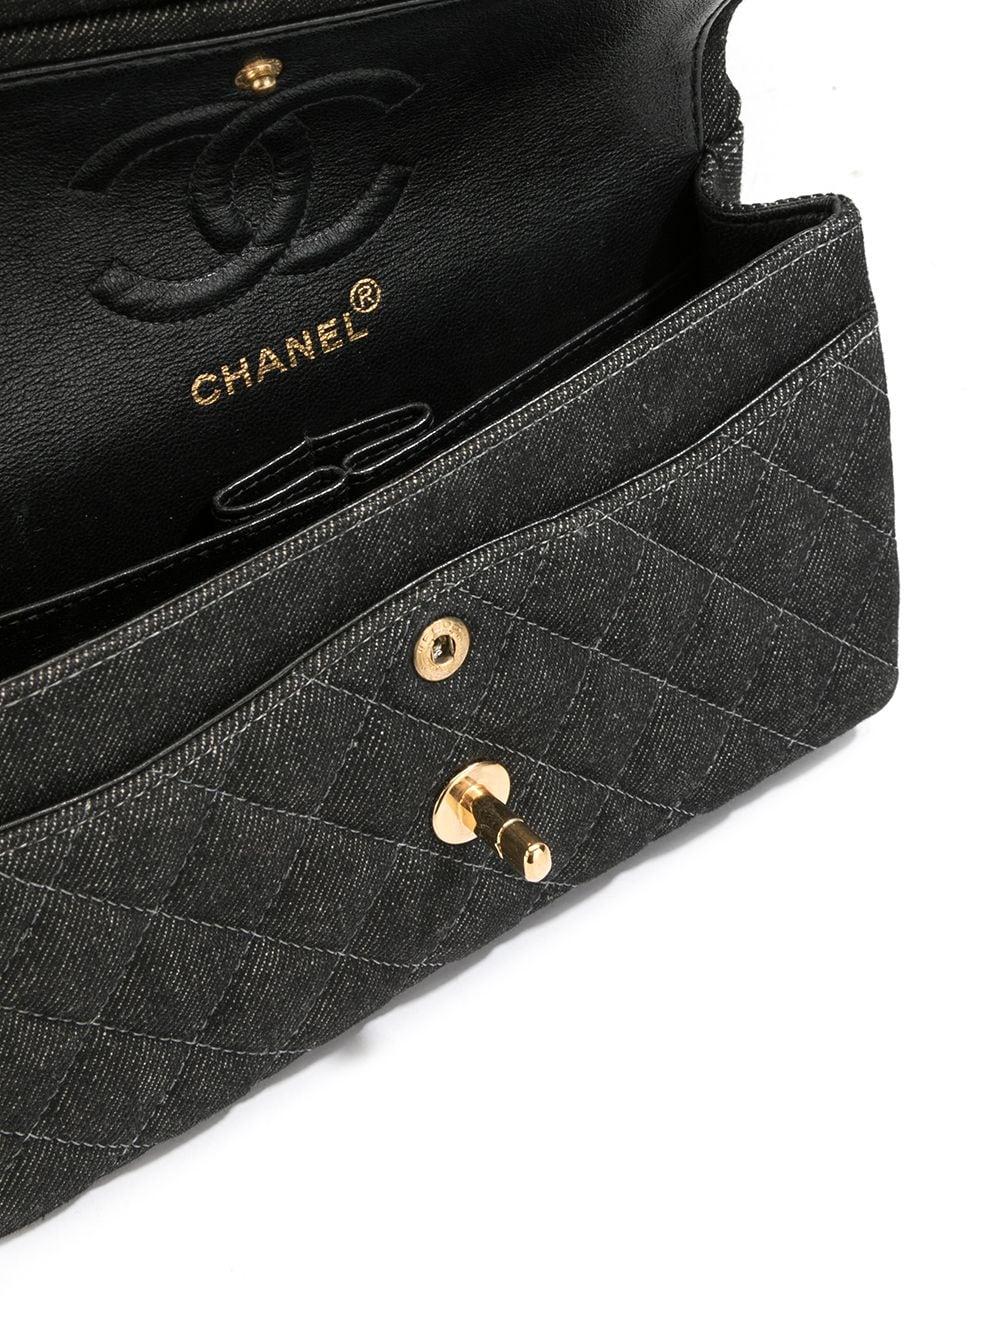 Chanel 1998 Rare Vintage Medium Denim Quilted Classic Flap Bag For Sale 4